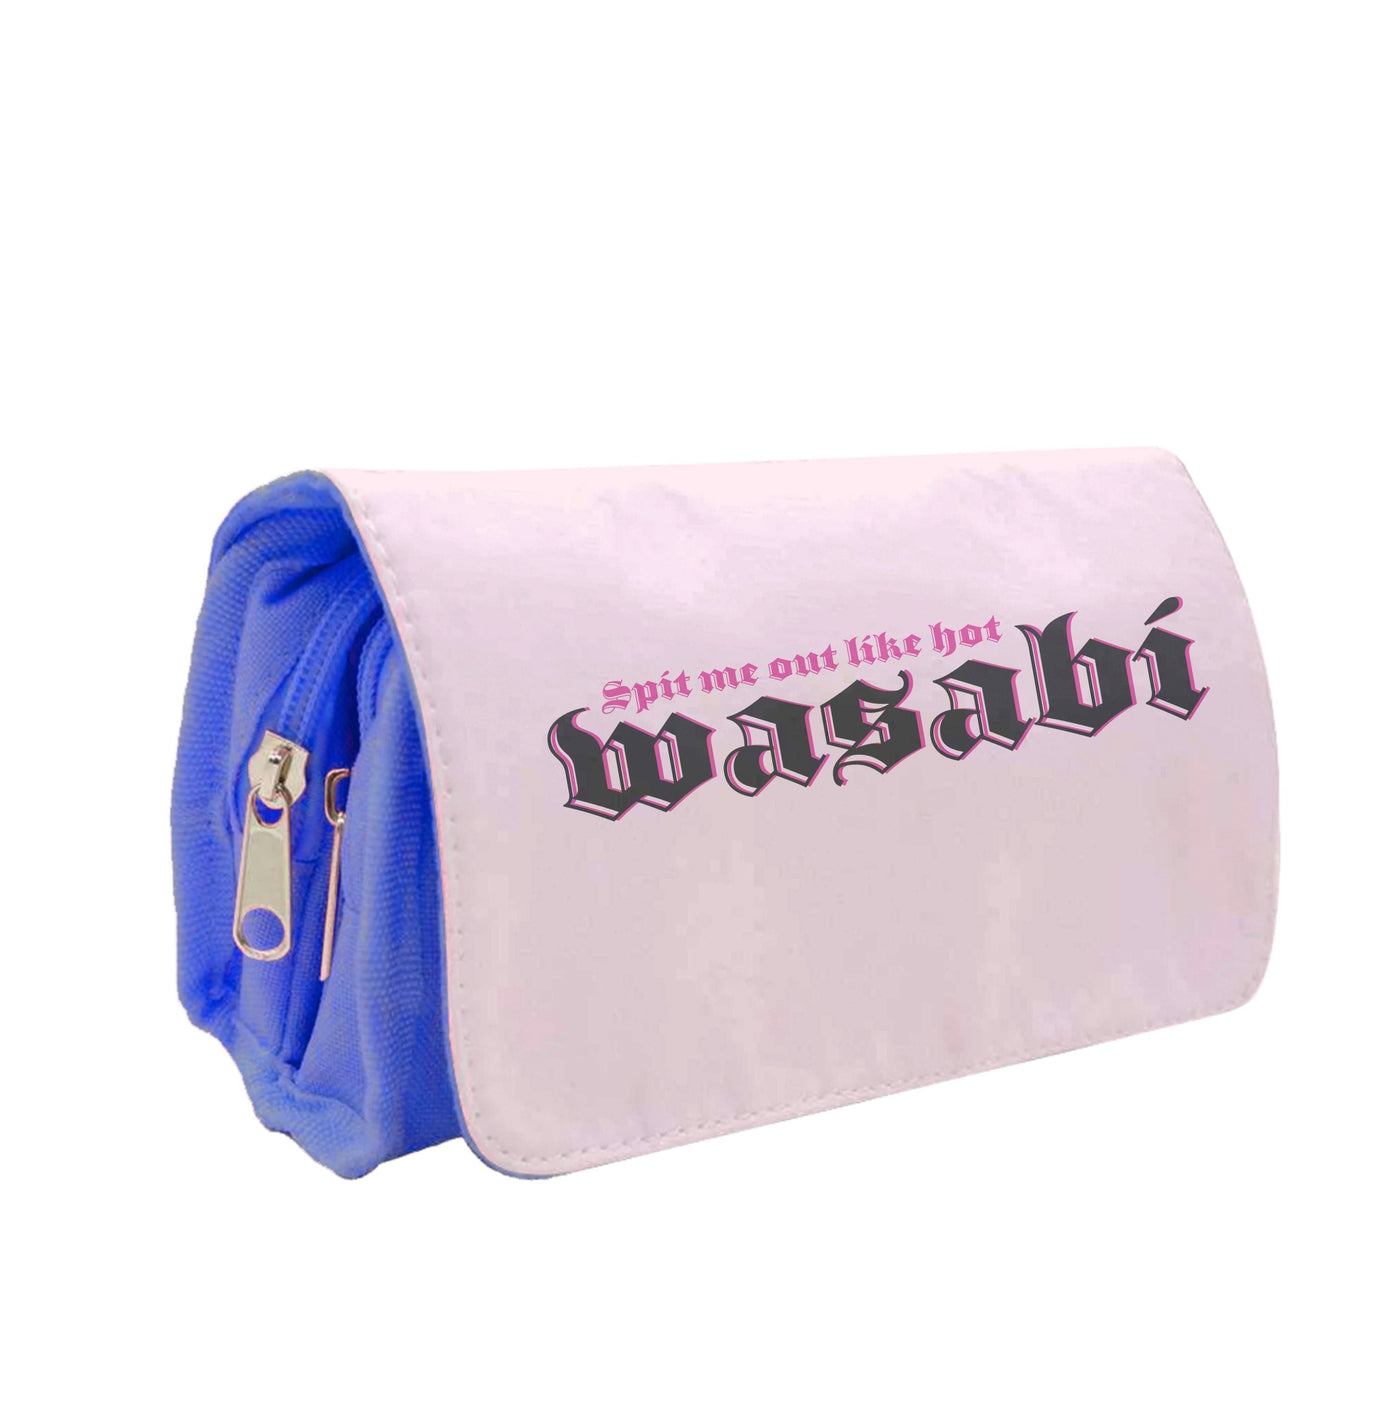 Wasabi Quote - Little Mix Pencil Case